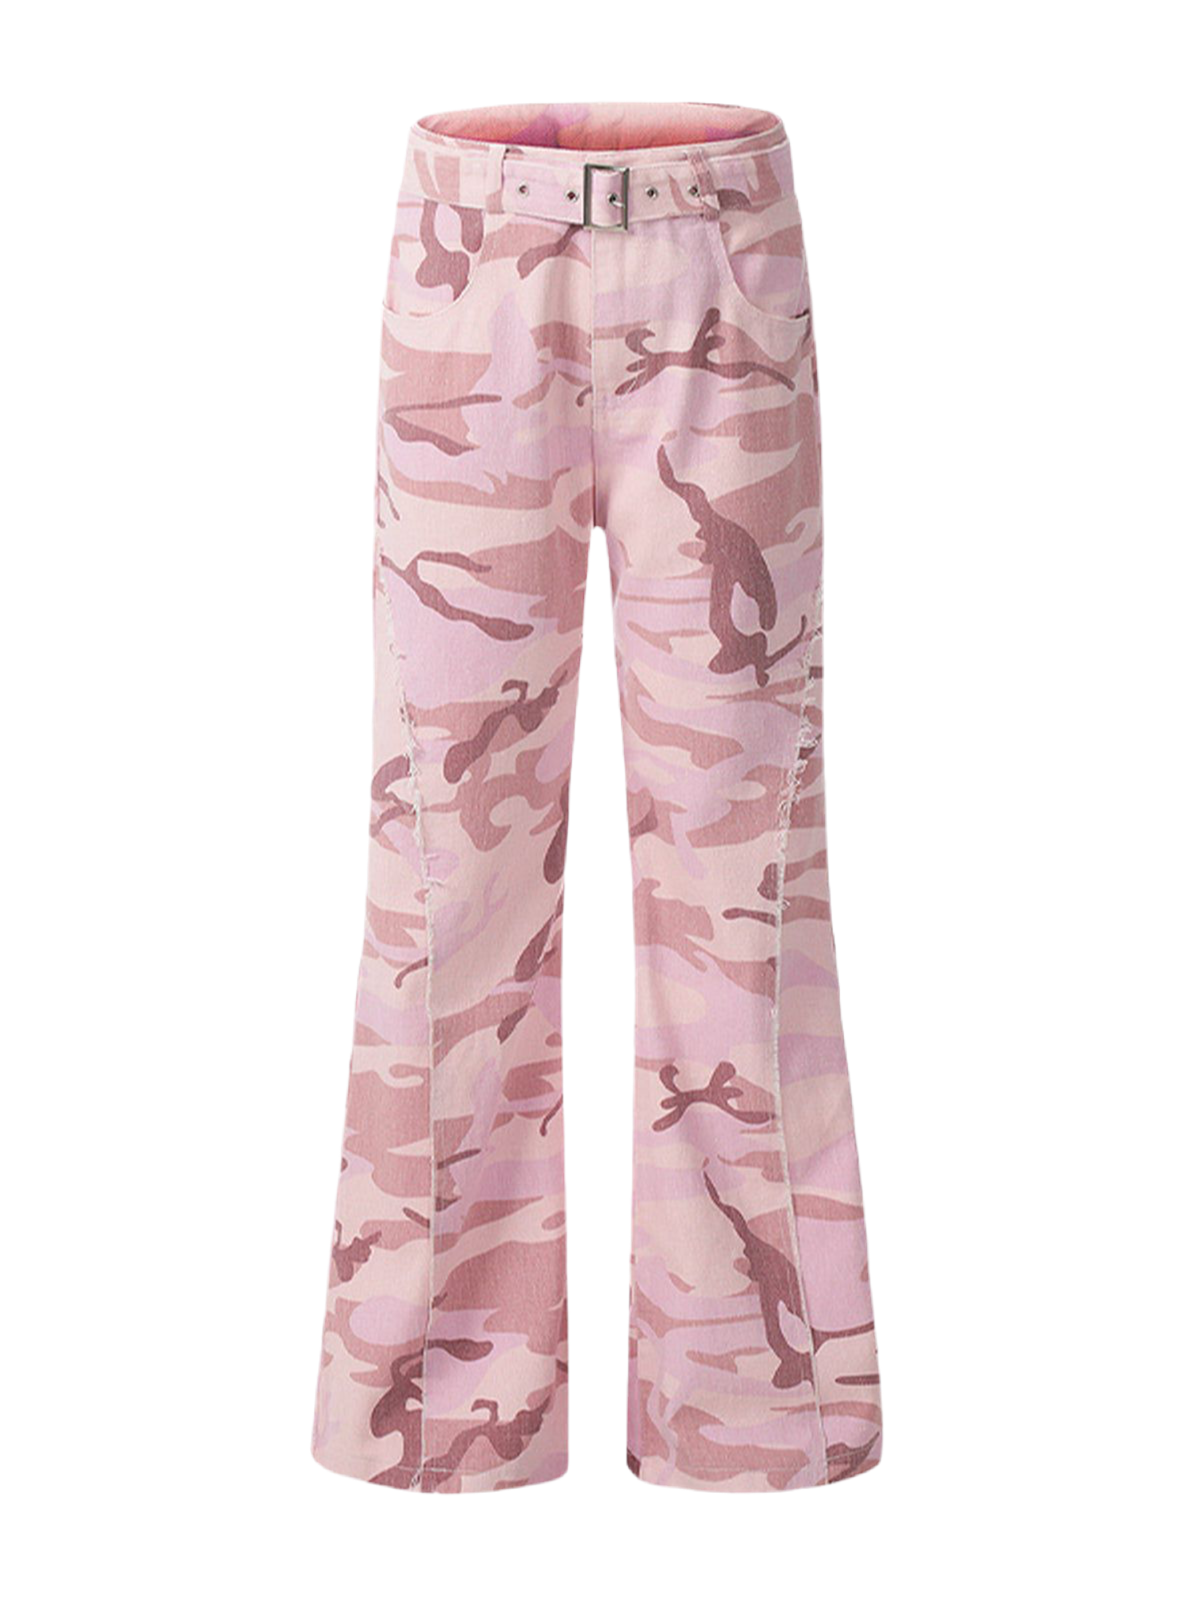 NB Pink Camouflage Denim